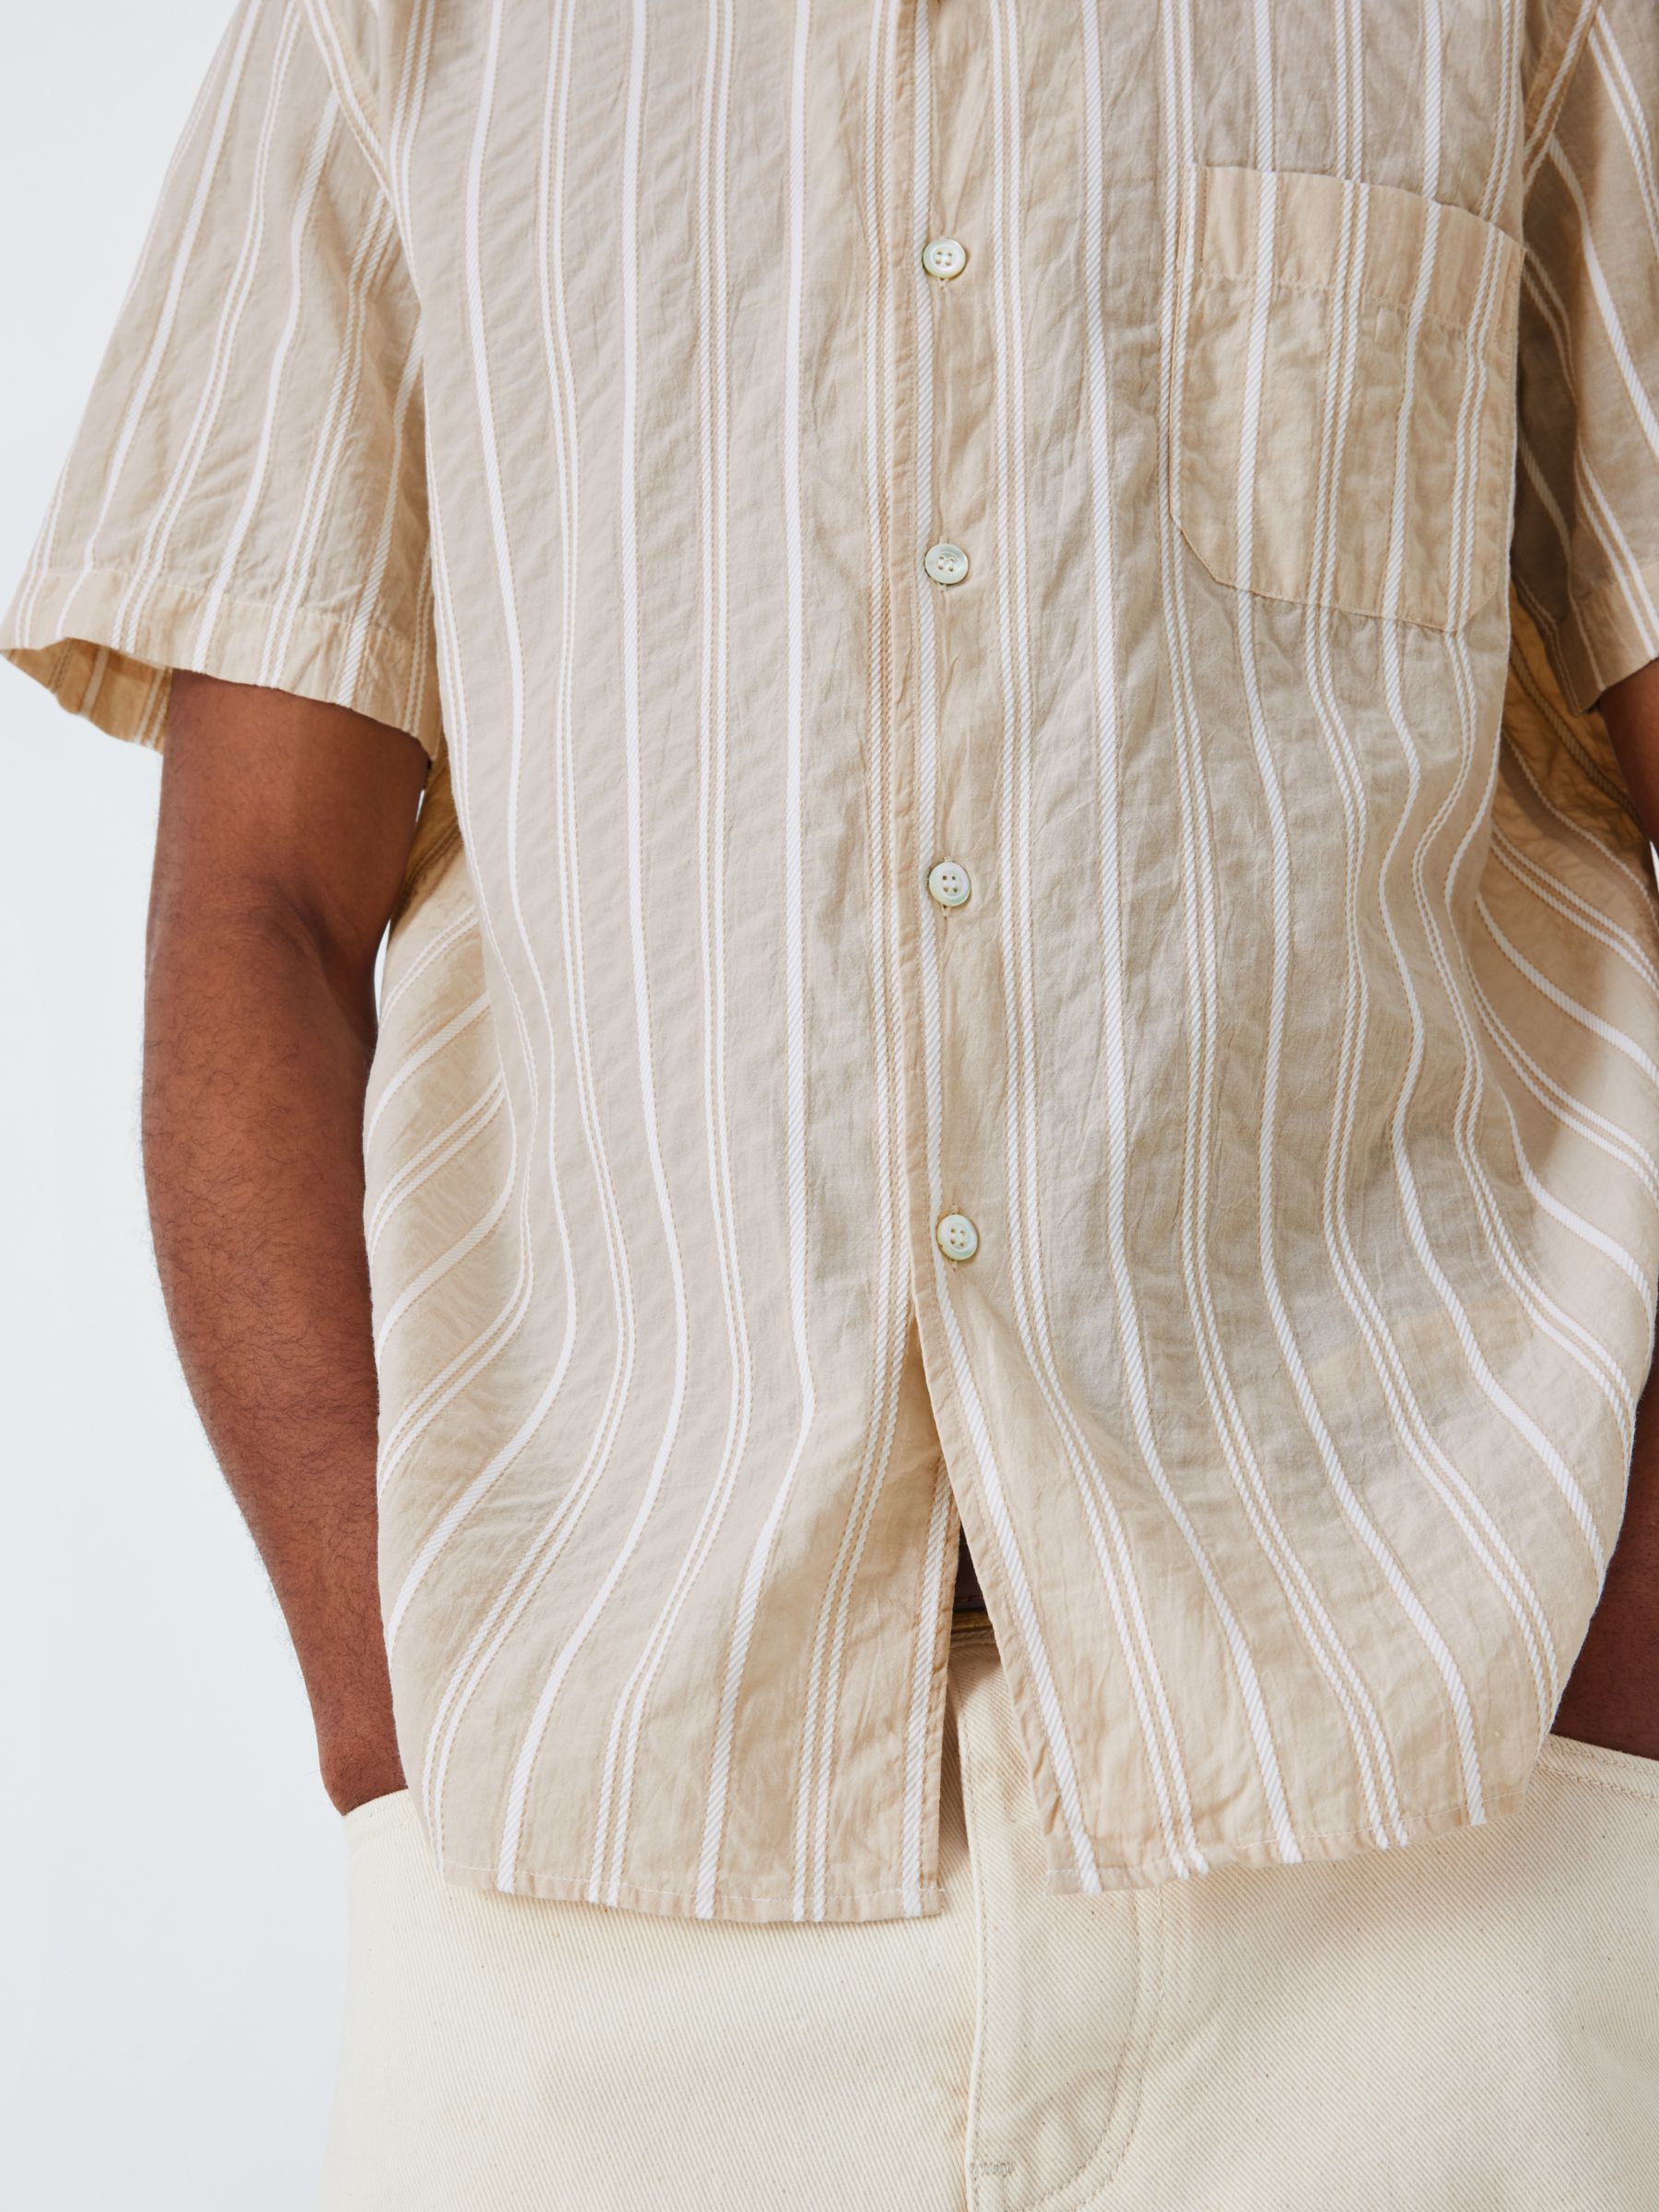 La Paz Cotton Panama Stripe Shirt, Sand Rope, S